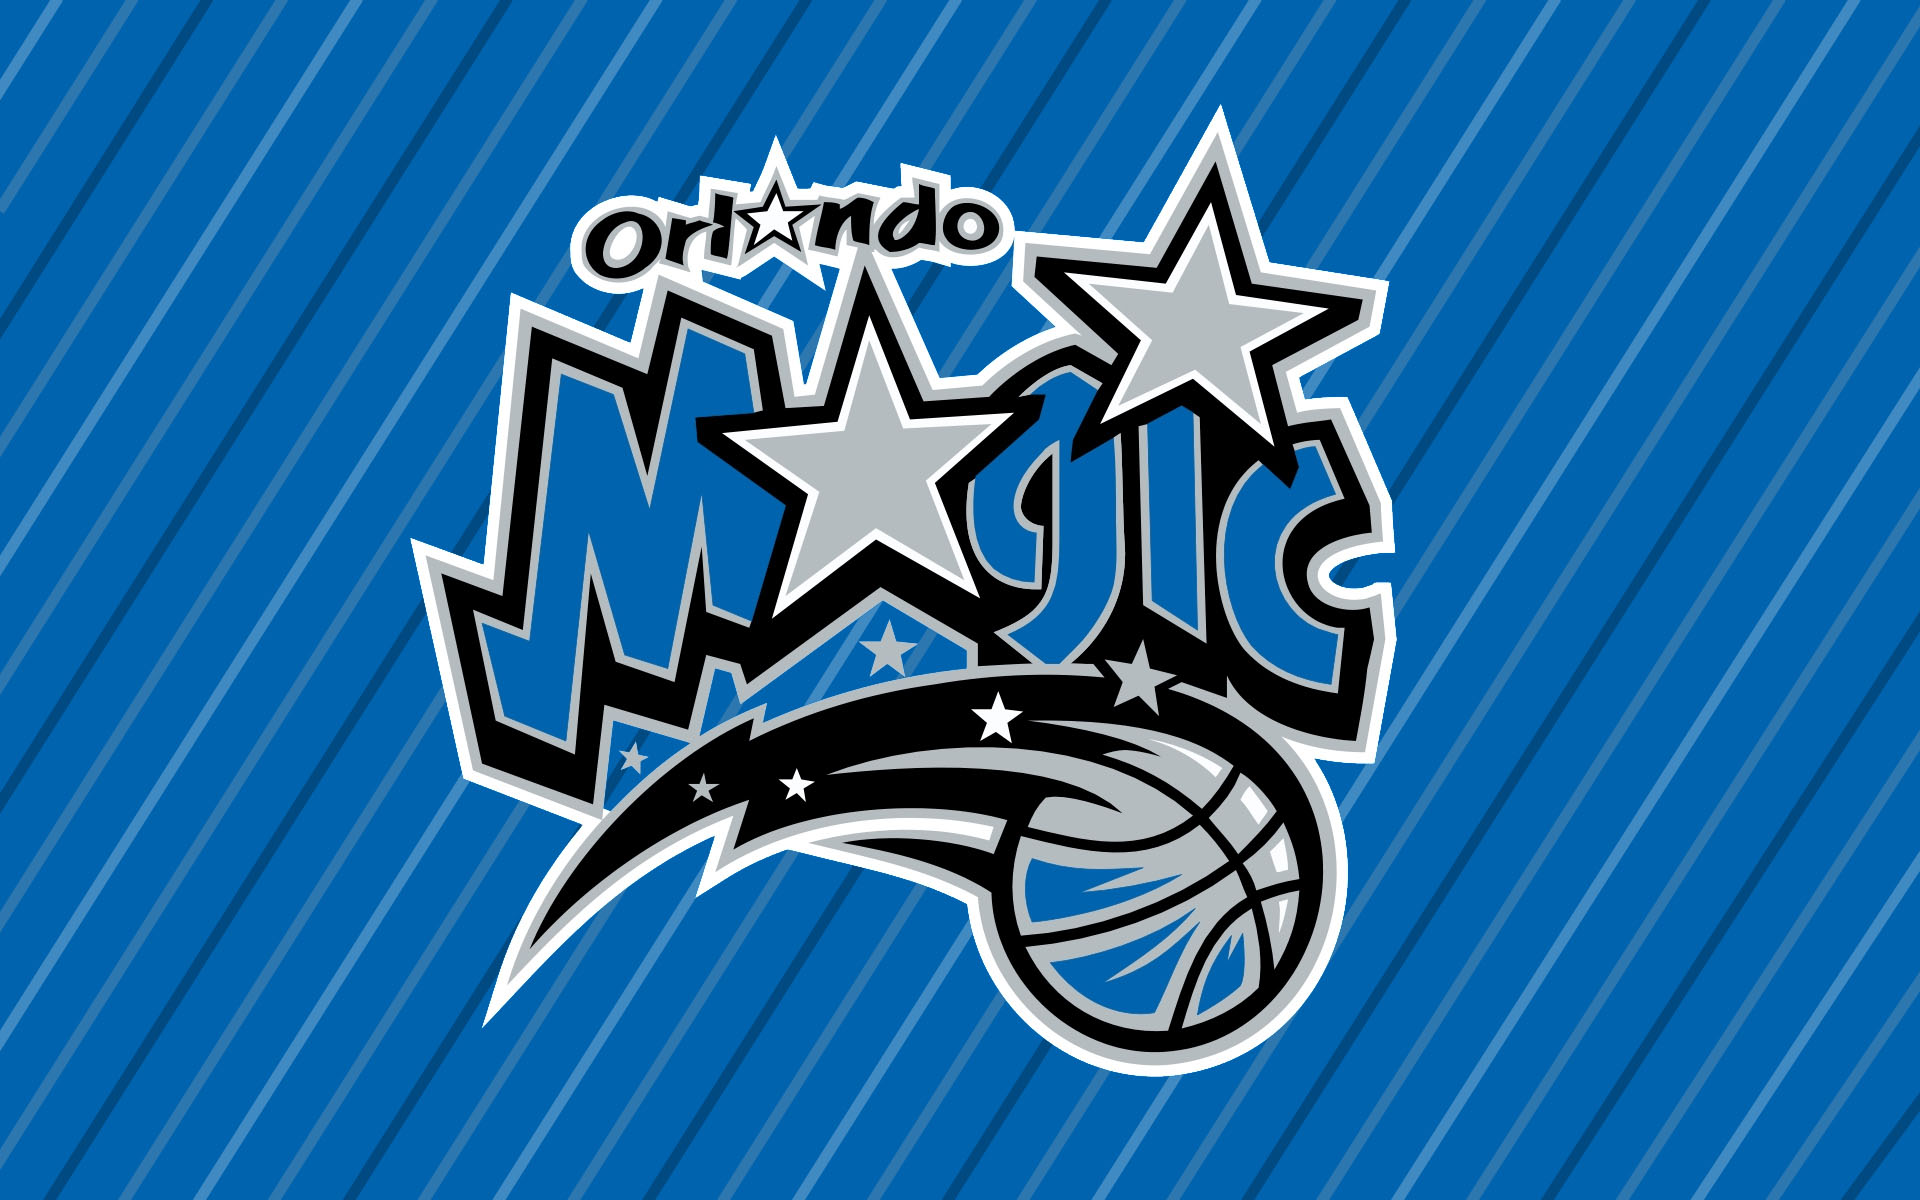 Orlando Magic vs. Cleveland Cavaliers Tickets, Orlando, Florida, United States